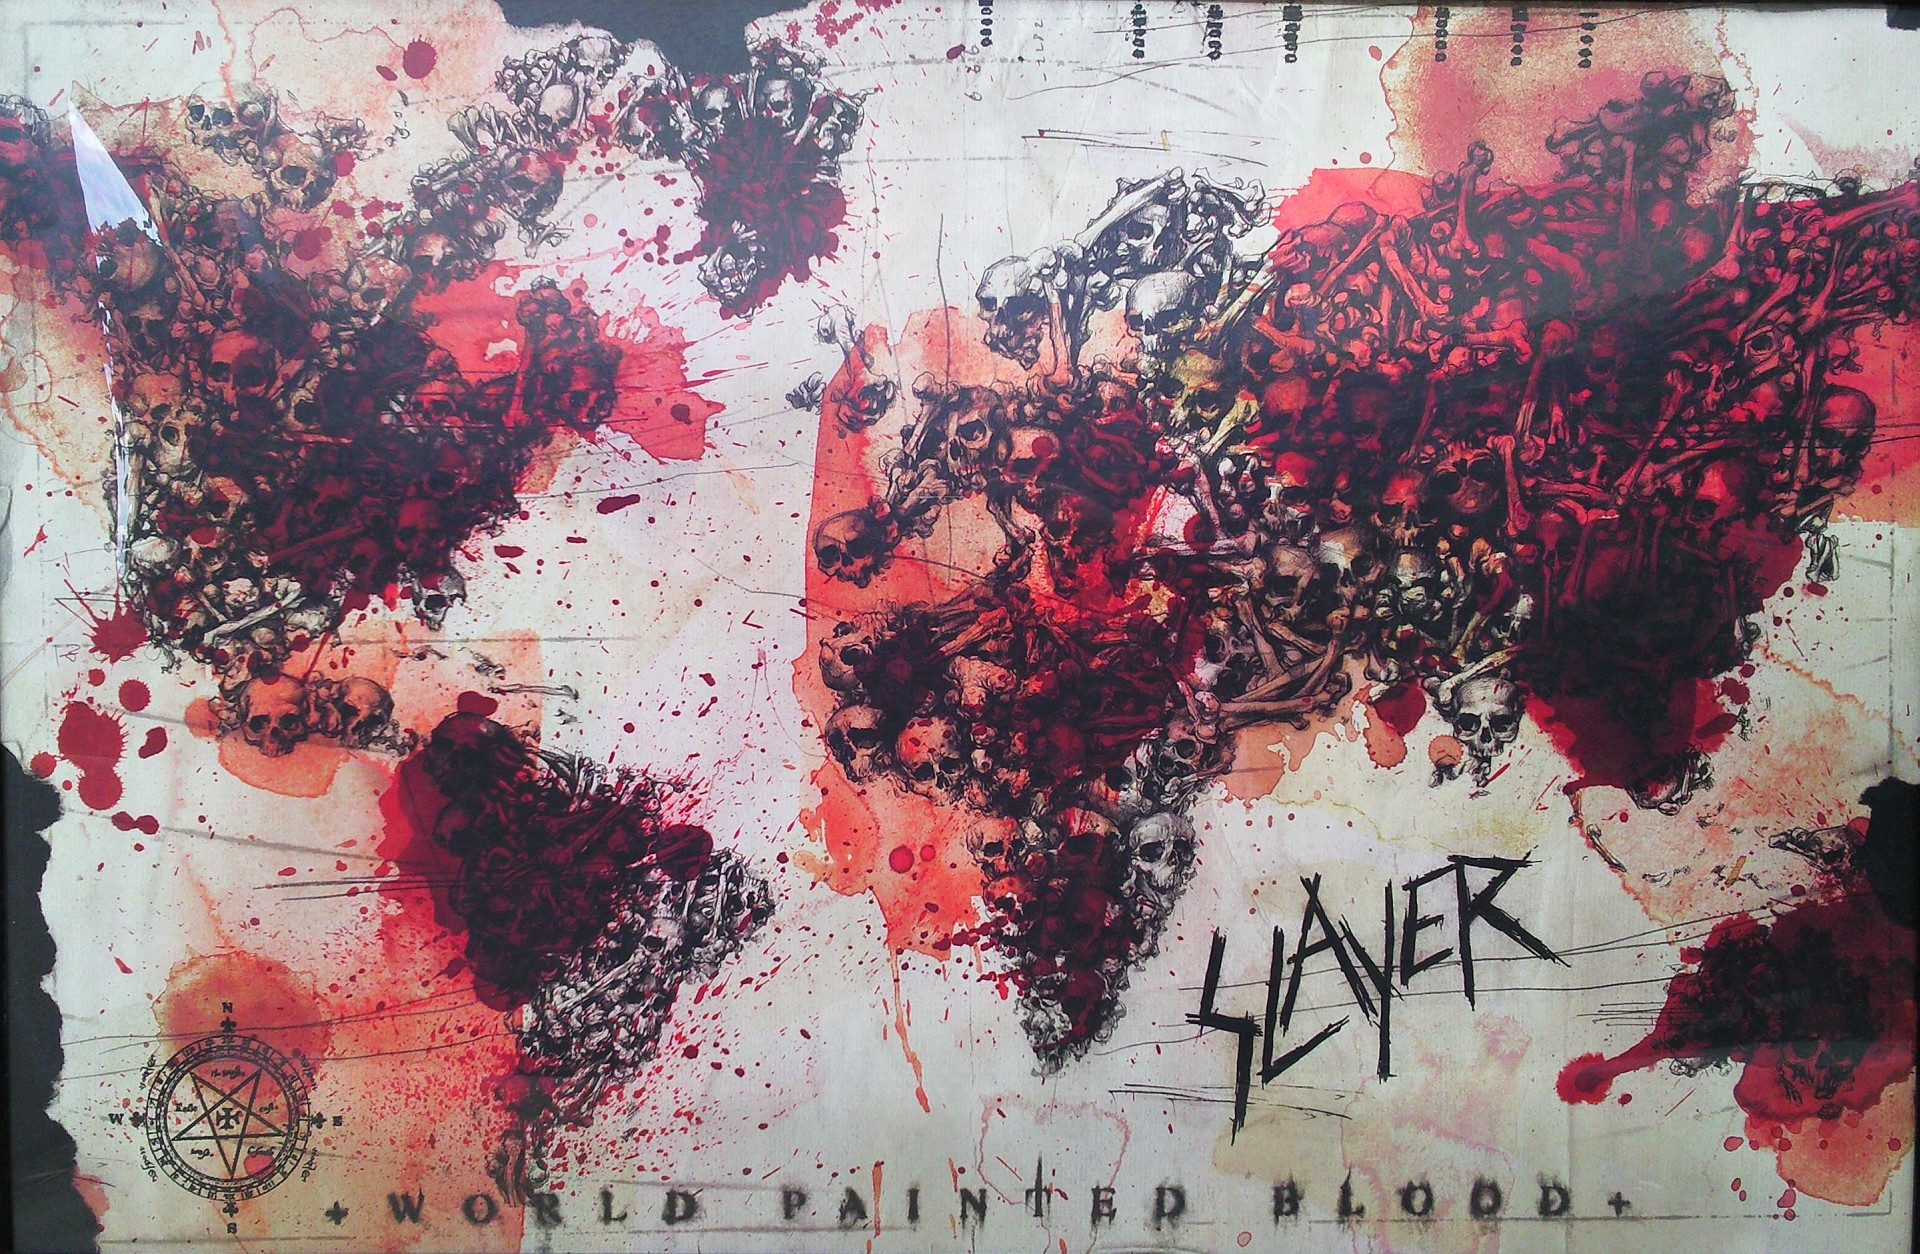 Music Slayer Wallpaper 1920x1254 Music Slayer